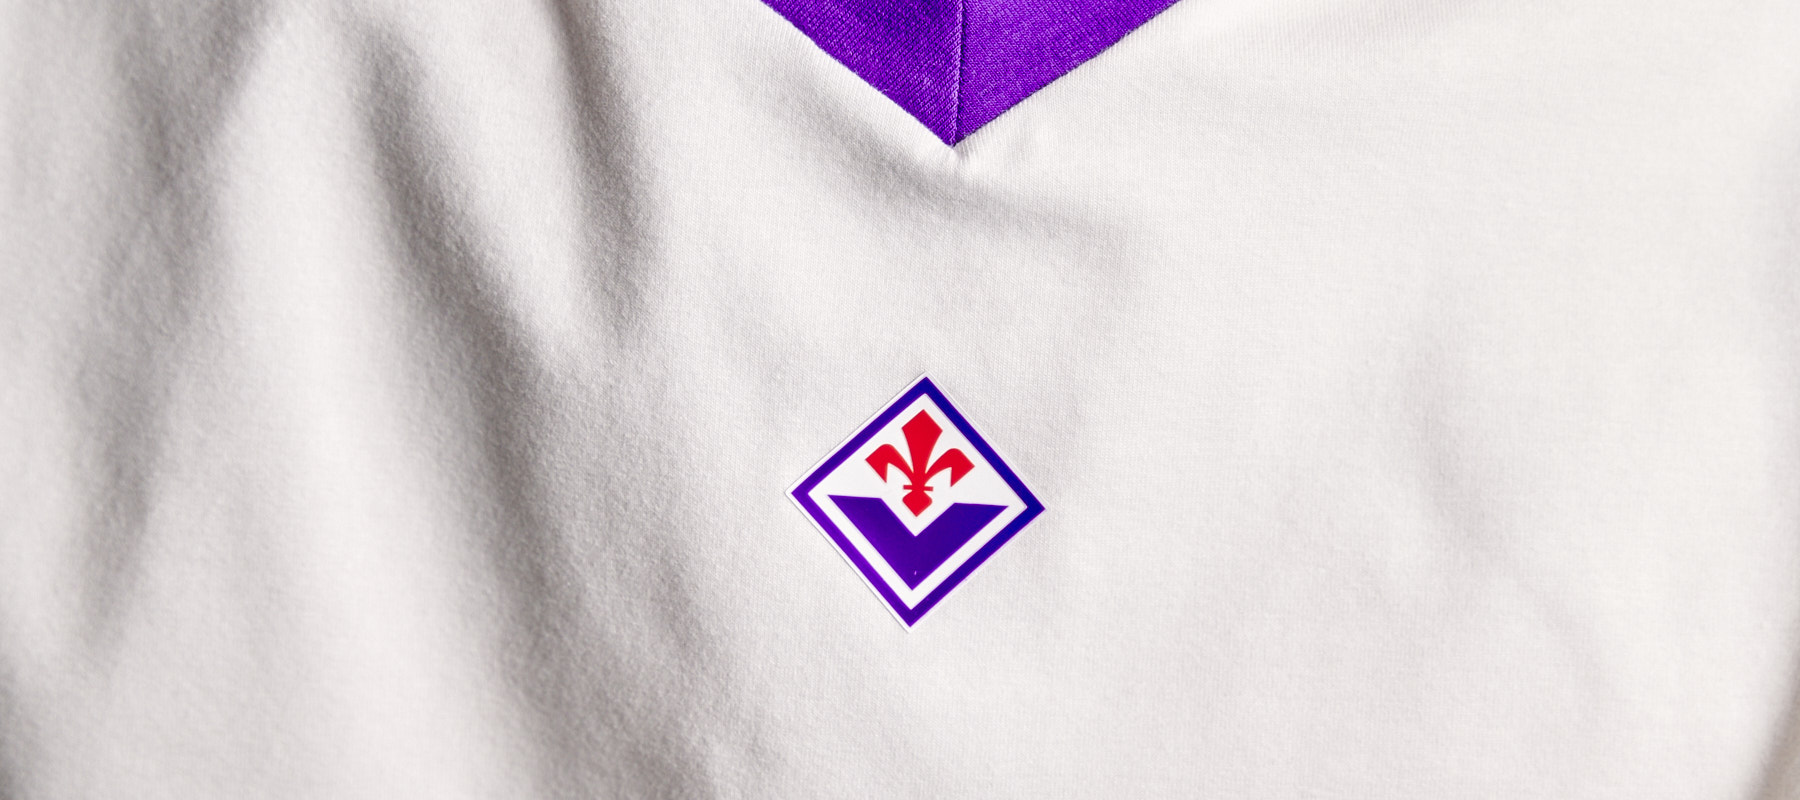 MONTEZEMOLO  ACF Fiorentina Official Fashion Partner Collection